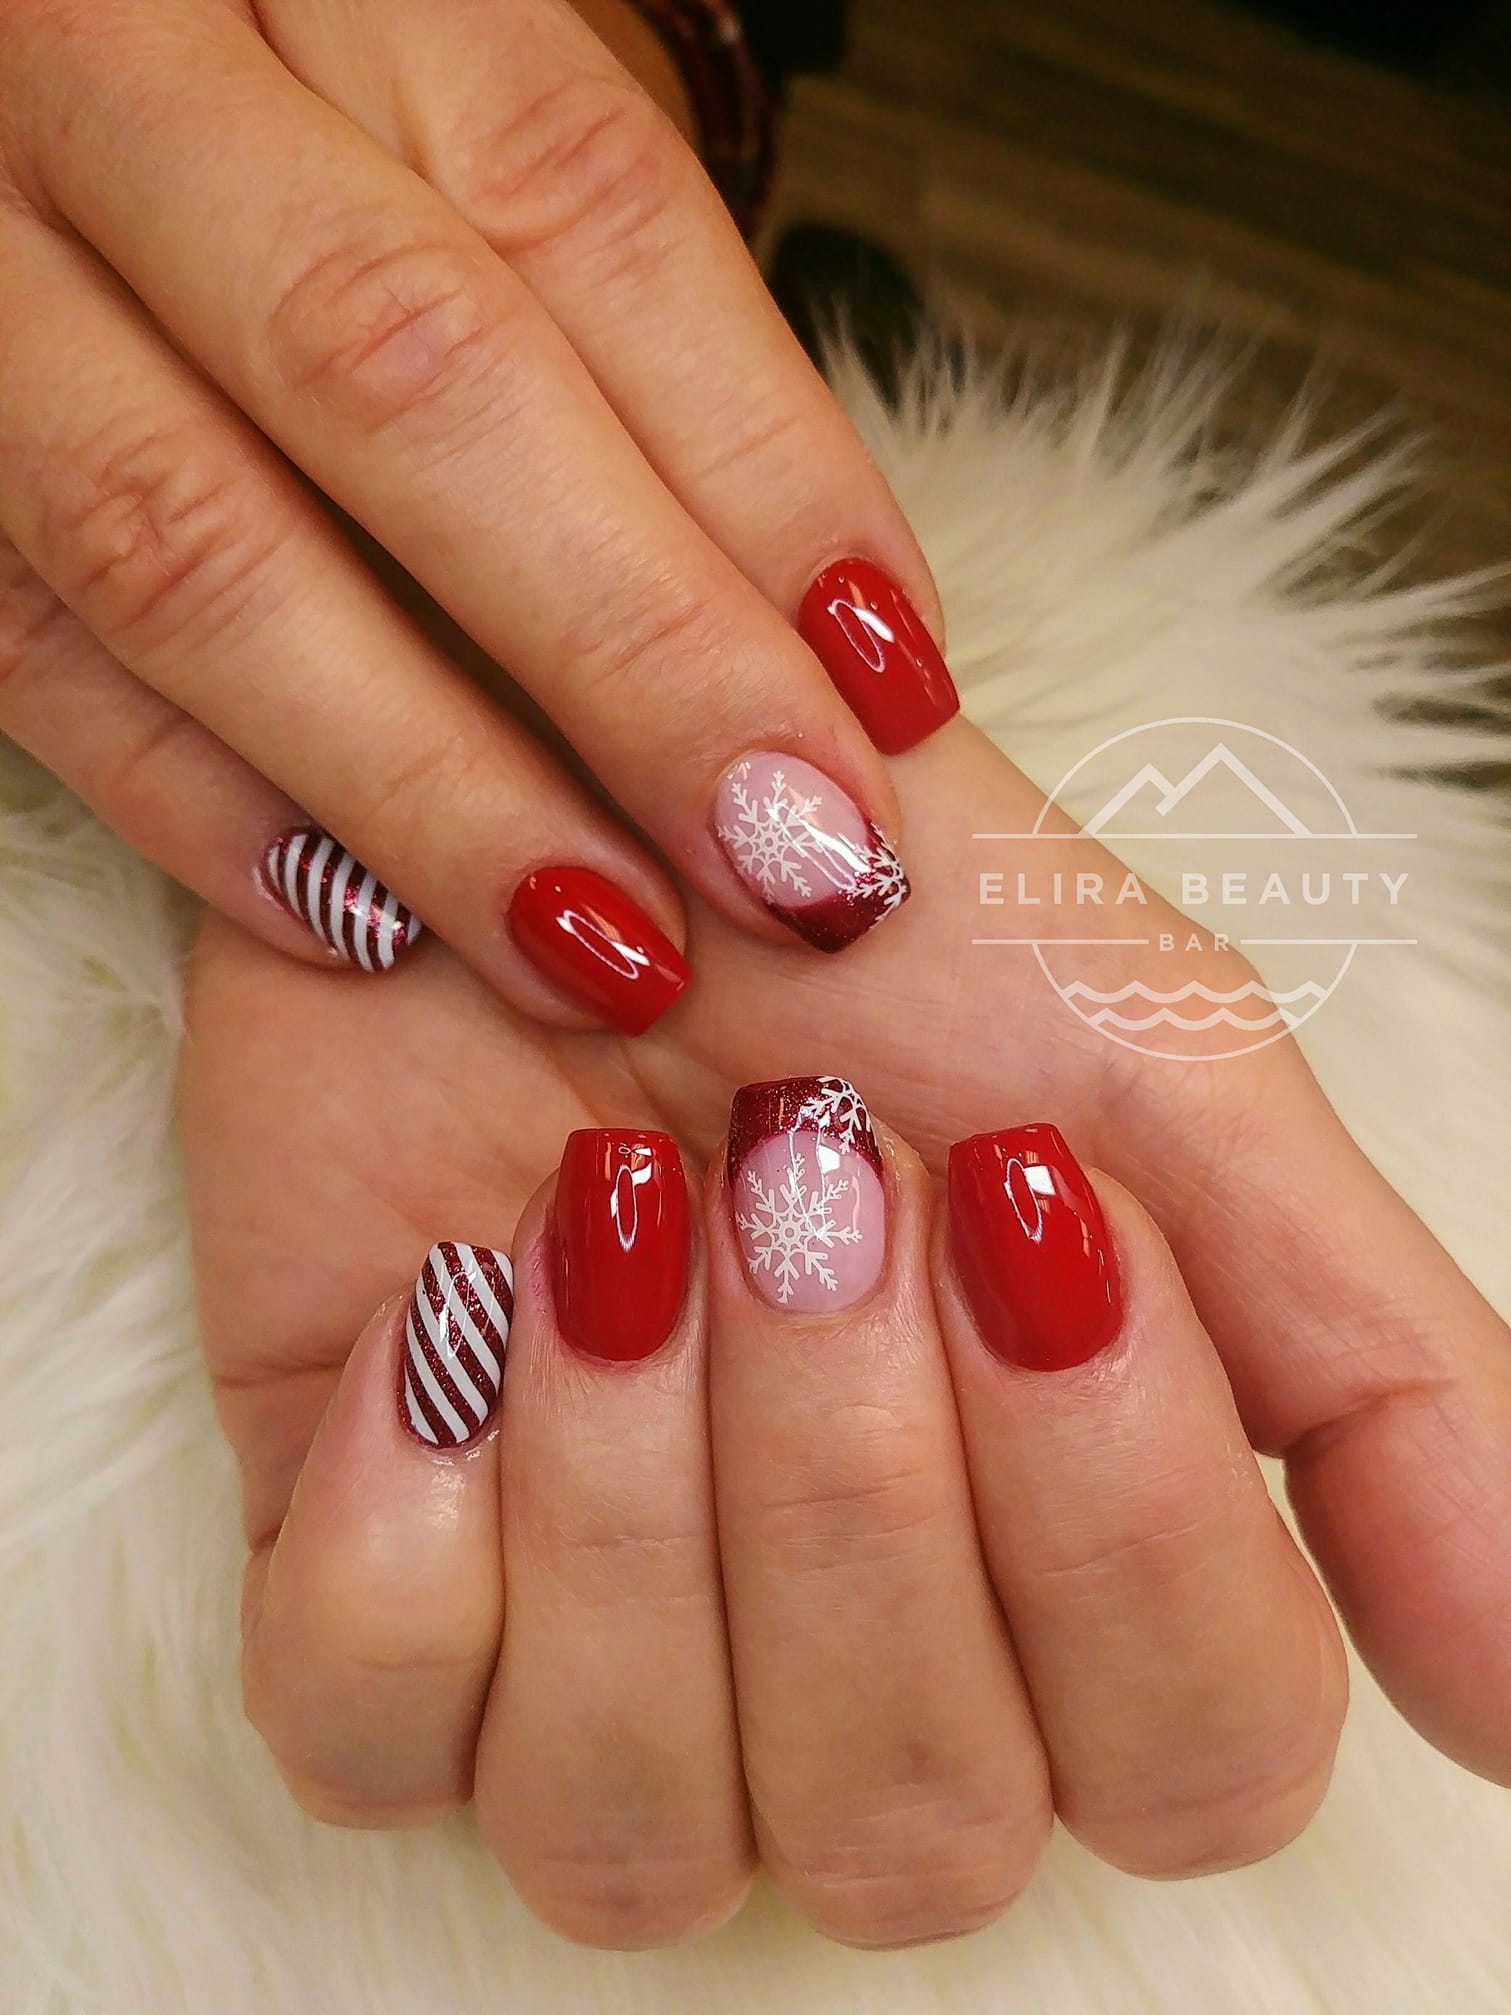 Nail Pictures - Artificial Nails & Pedicures - Elira Beauty Bar